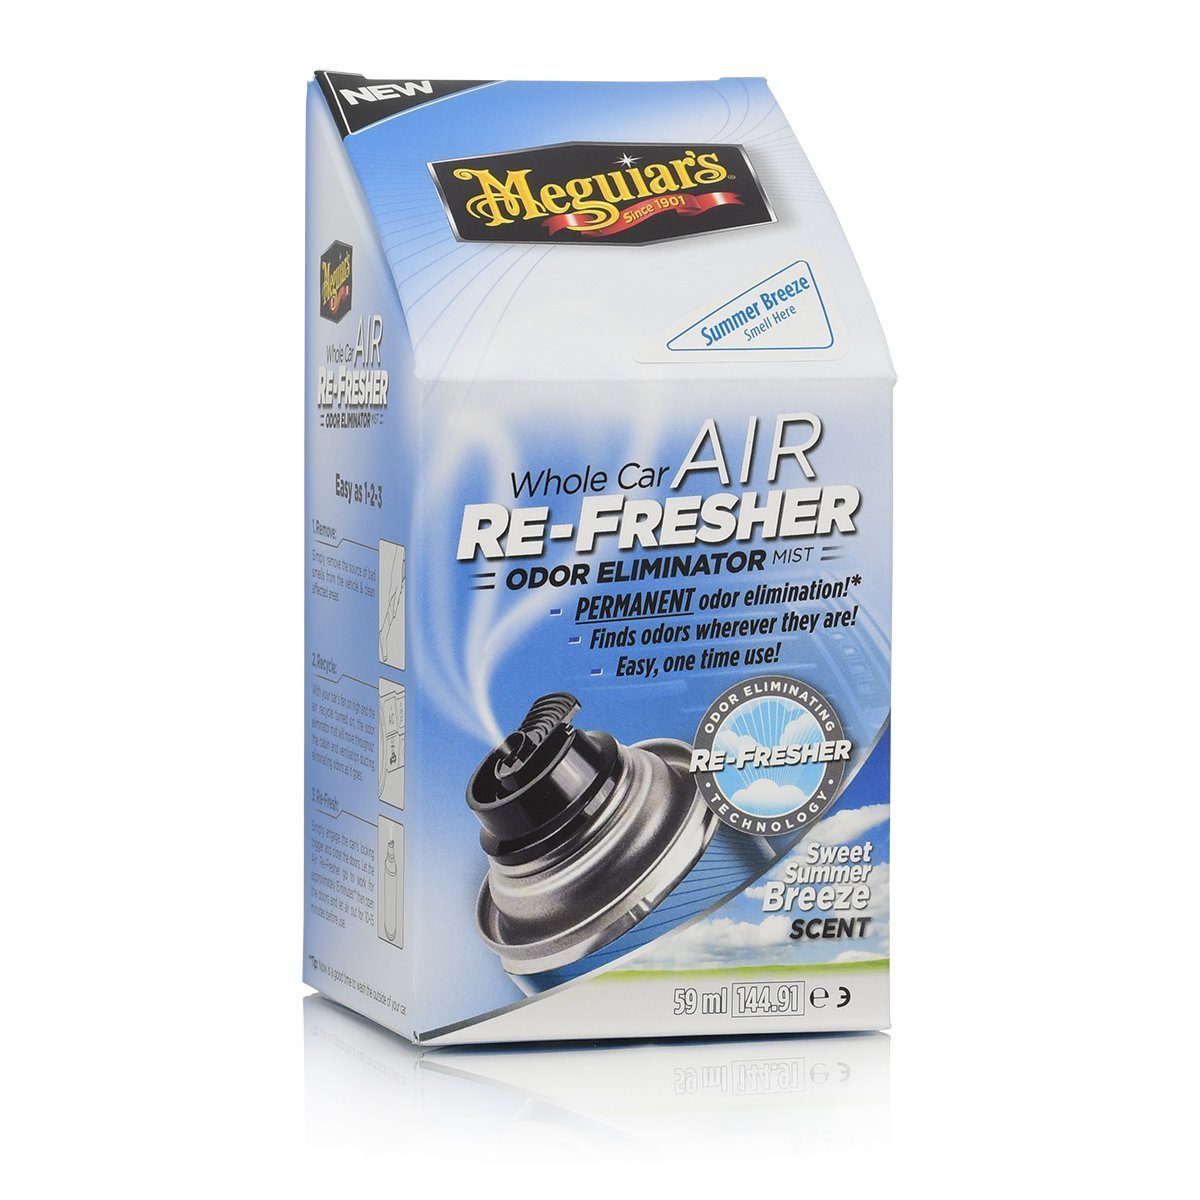 Meguiars Whole Car Air Re-Fresher Odour Eliminator Sweet Summer Breeze Scent 59ML